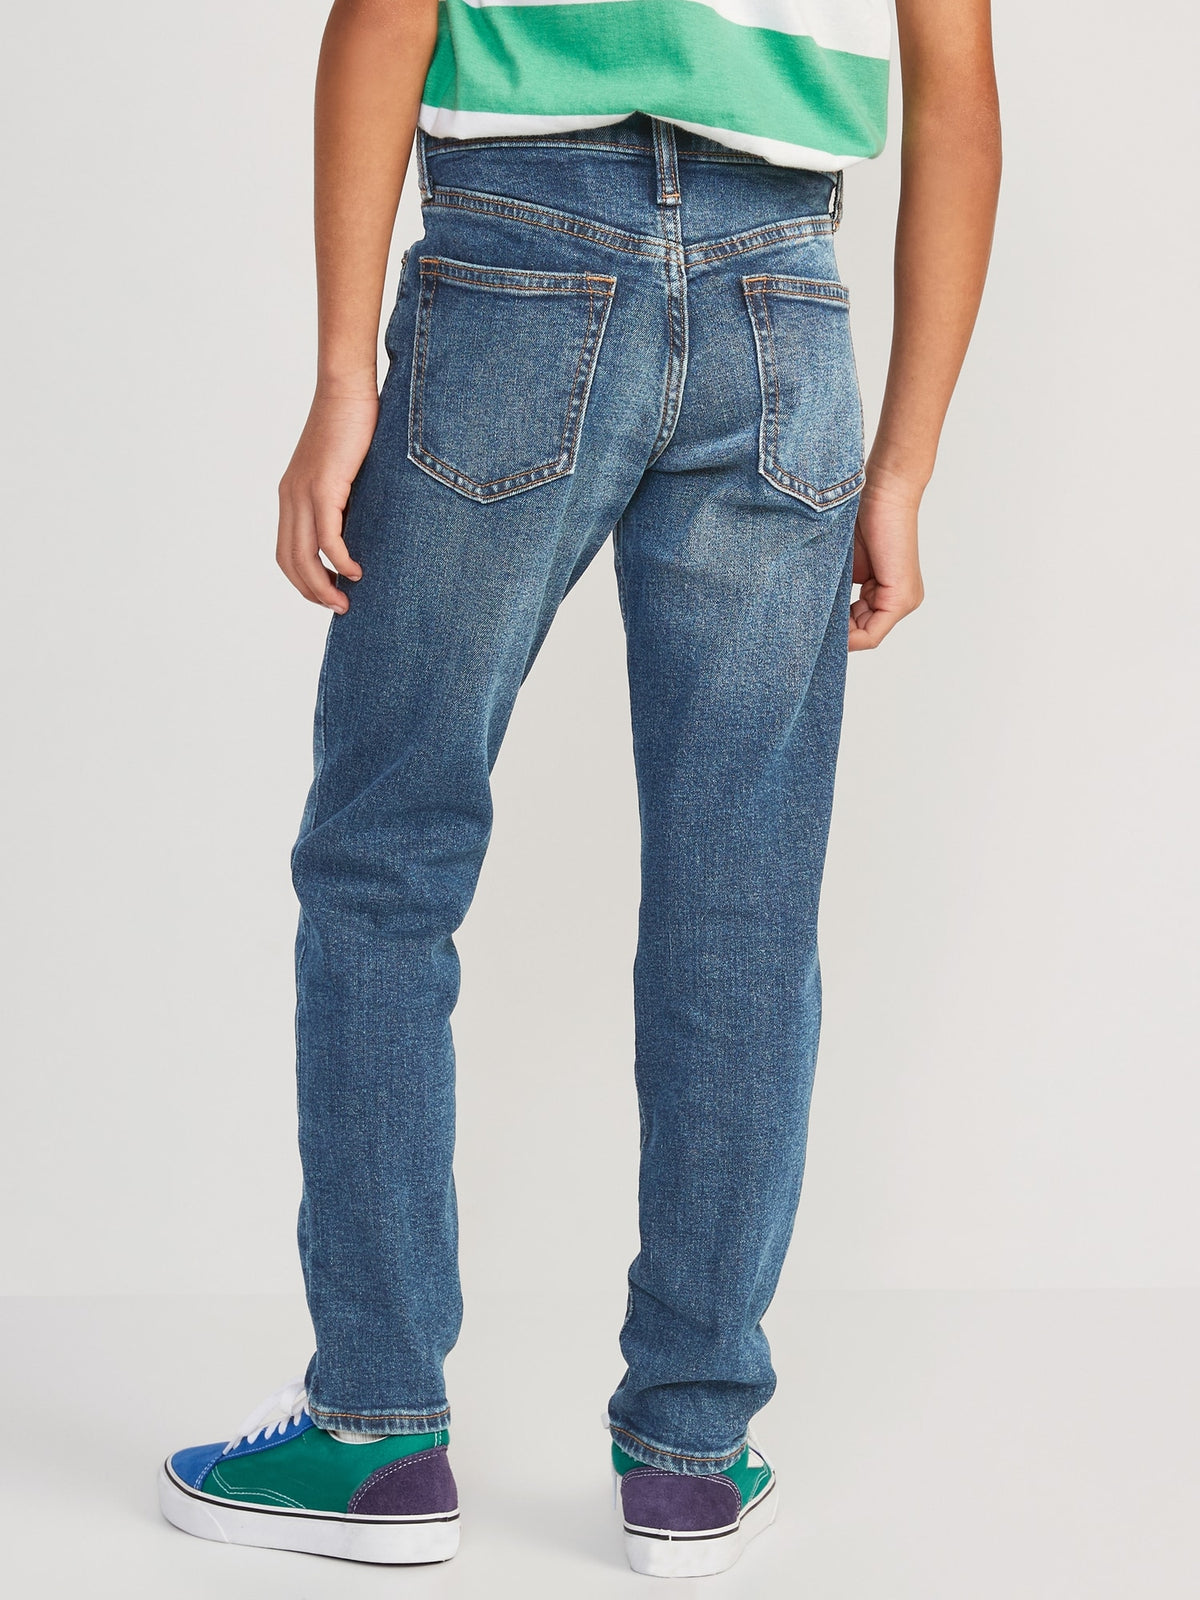 Original Taper Built-In Flex Jeans For Boys